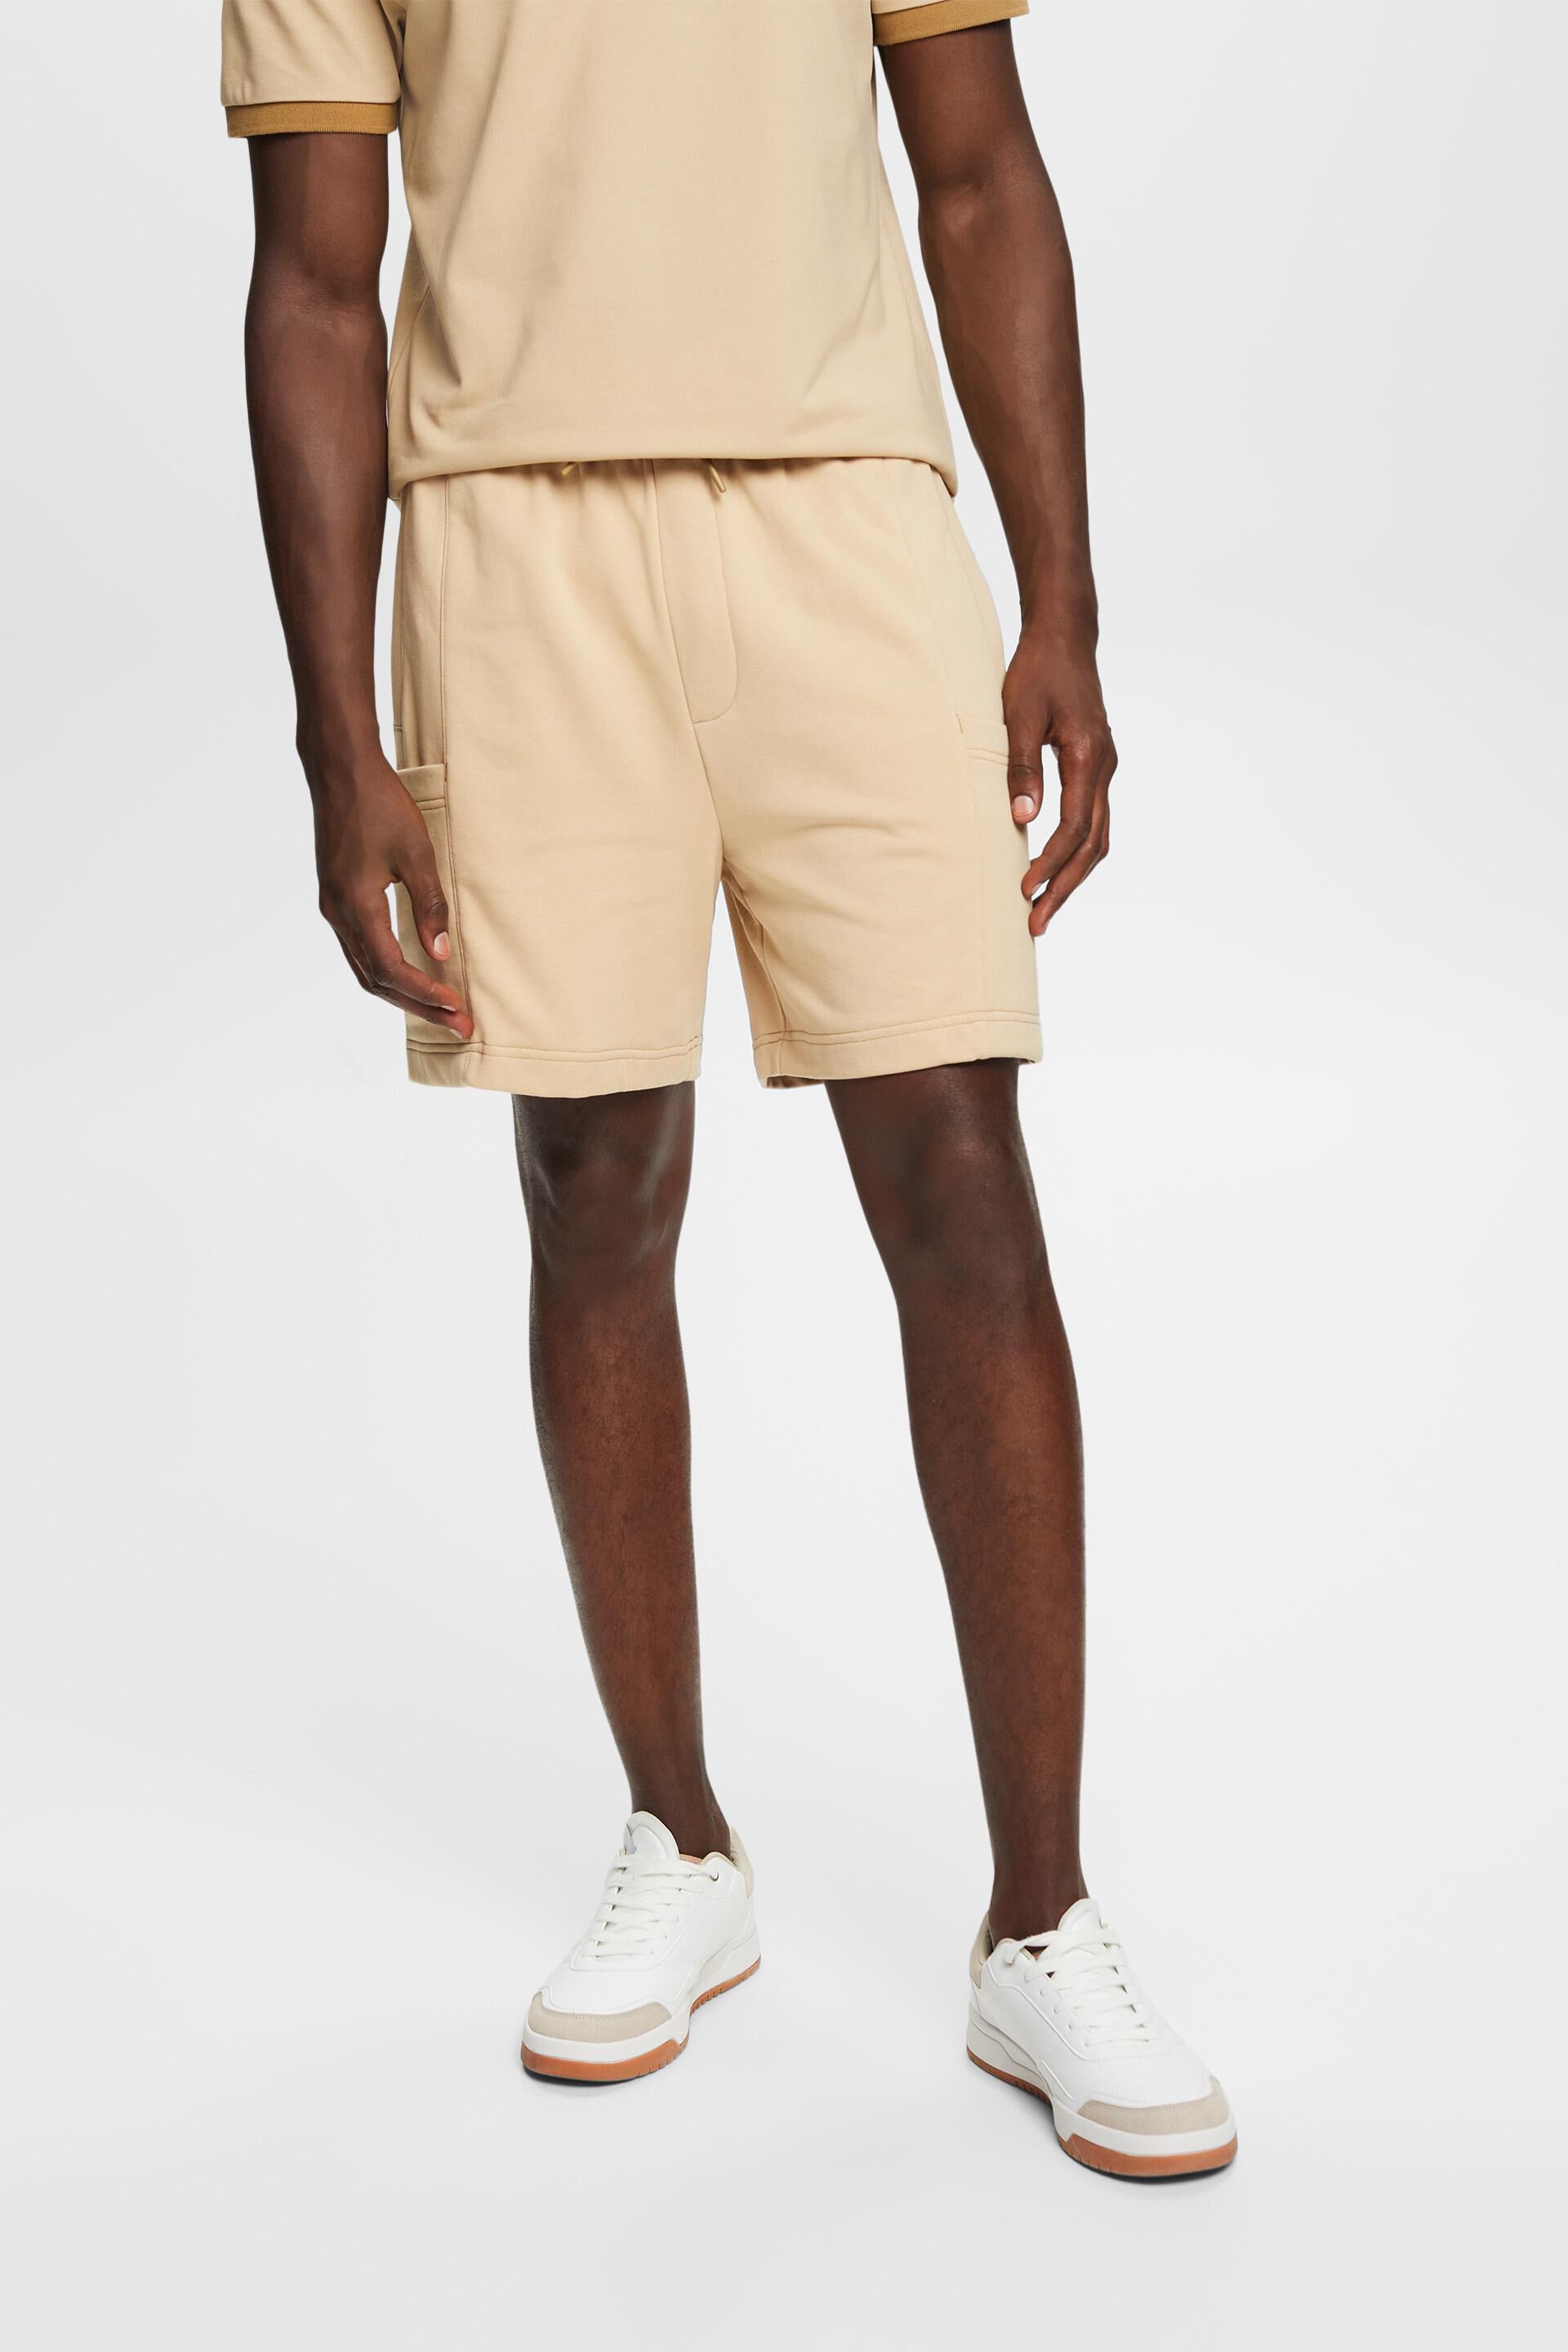 Esprit Jogger-style shorts